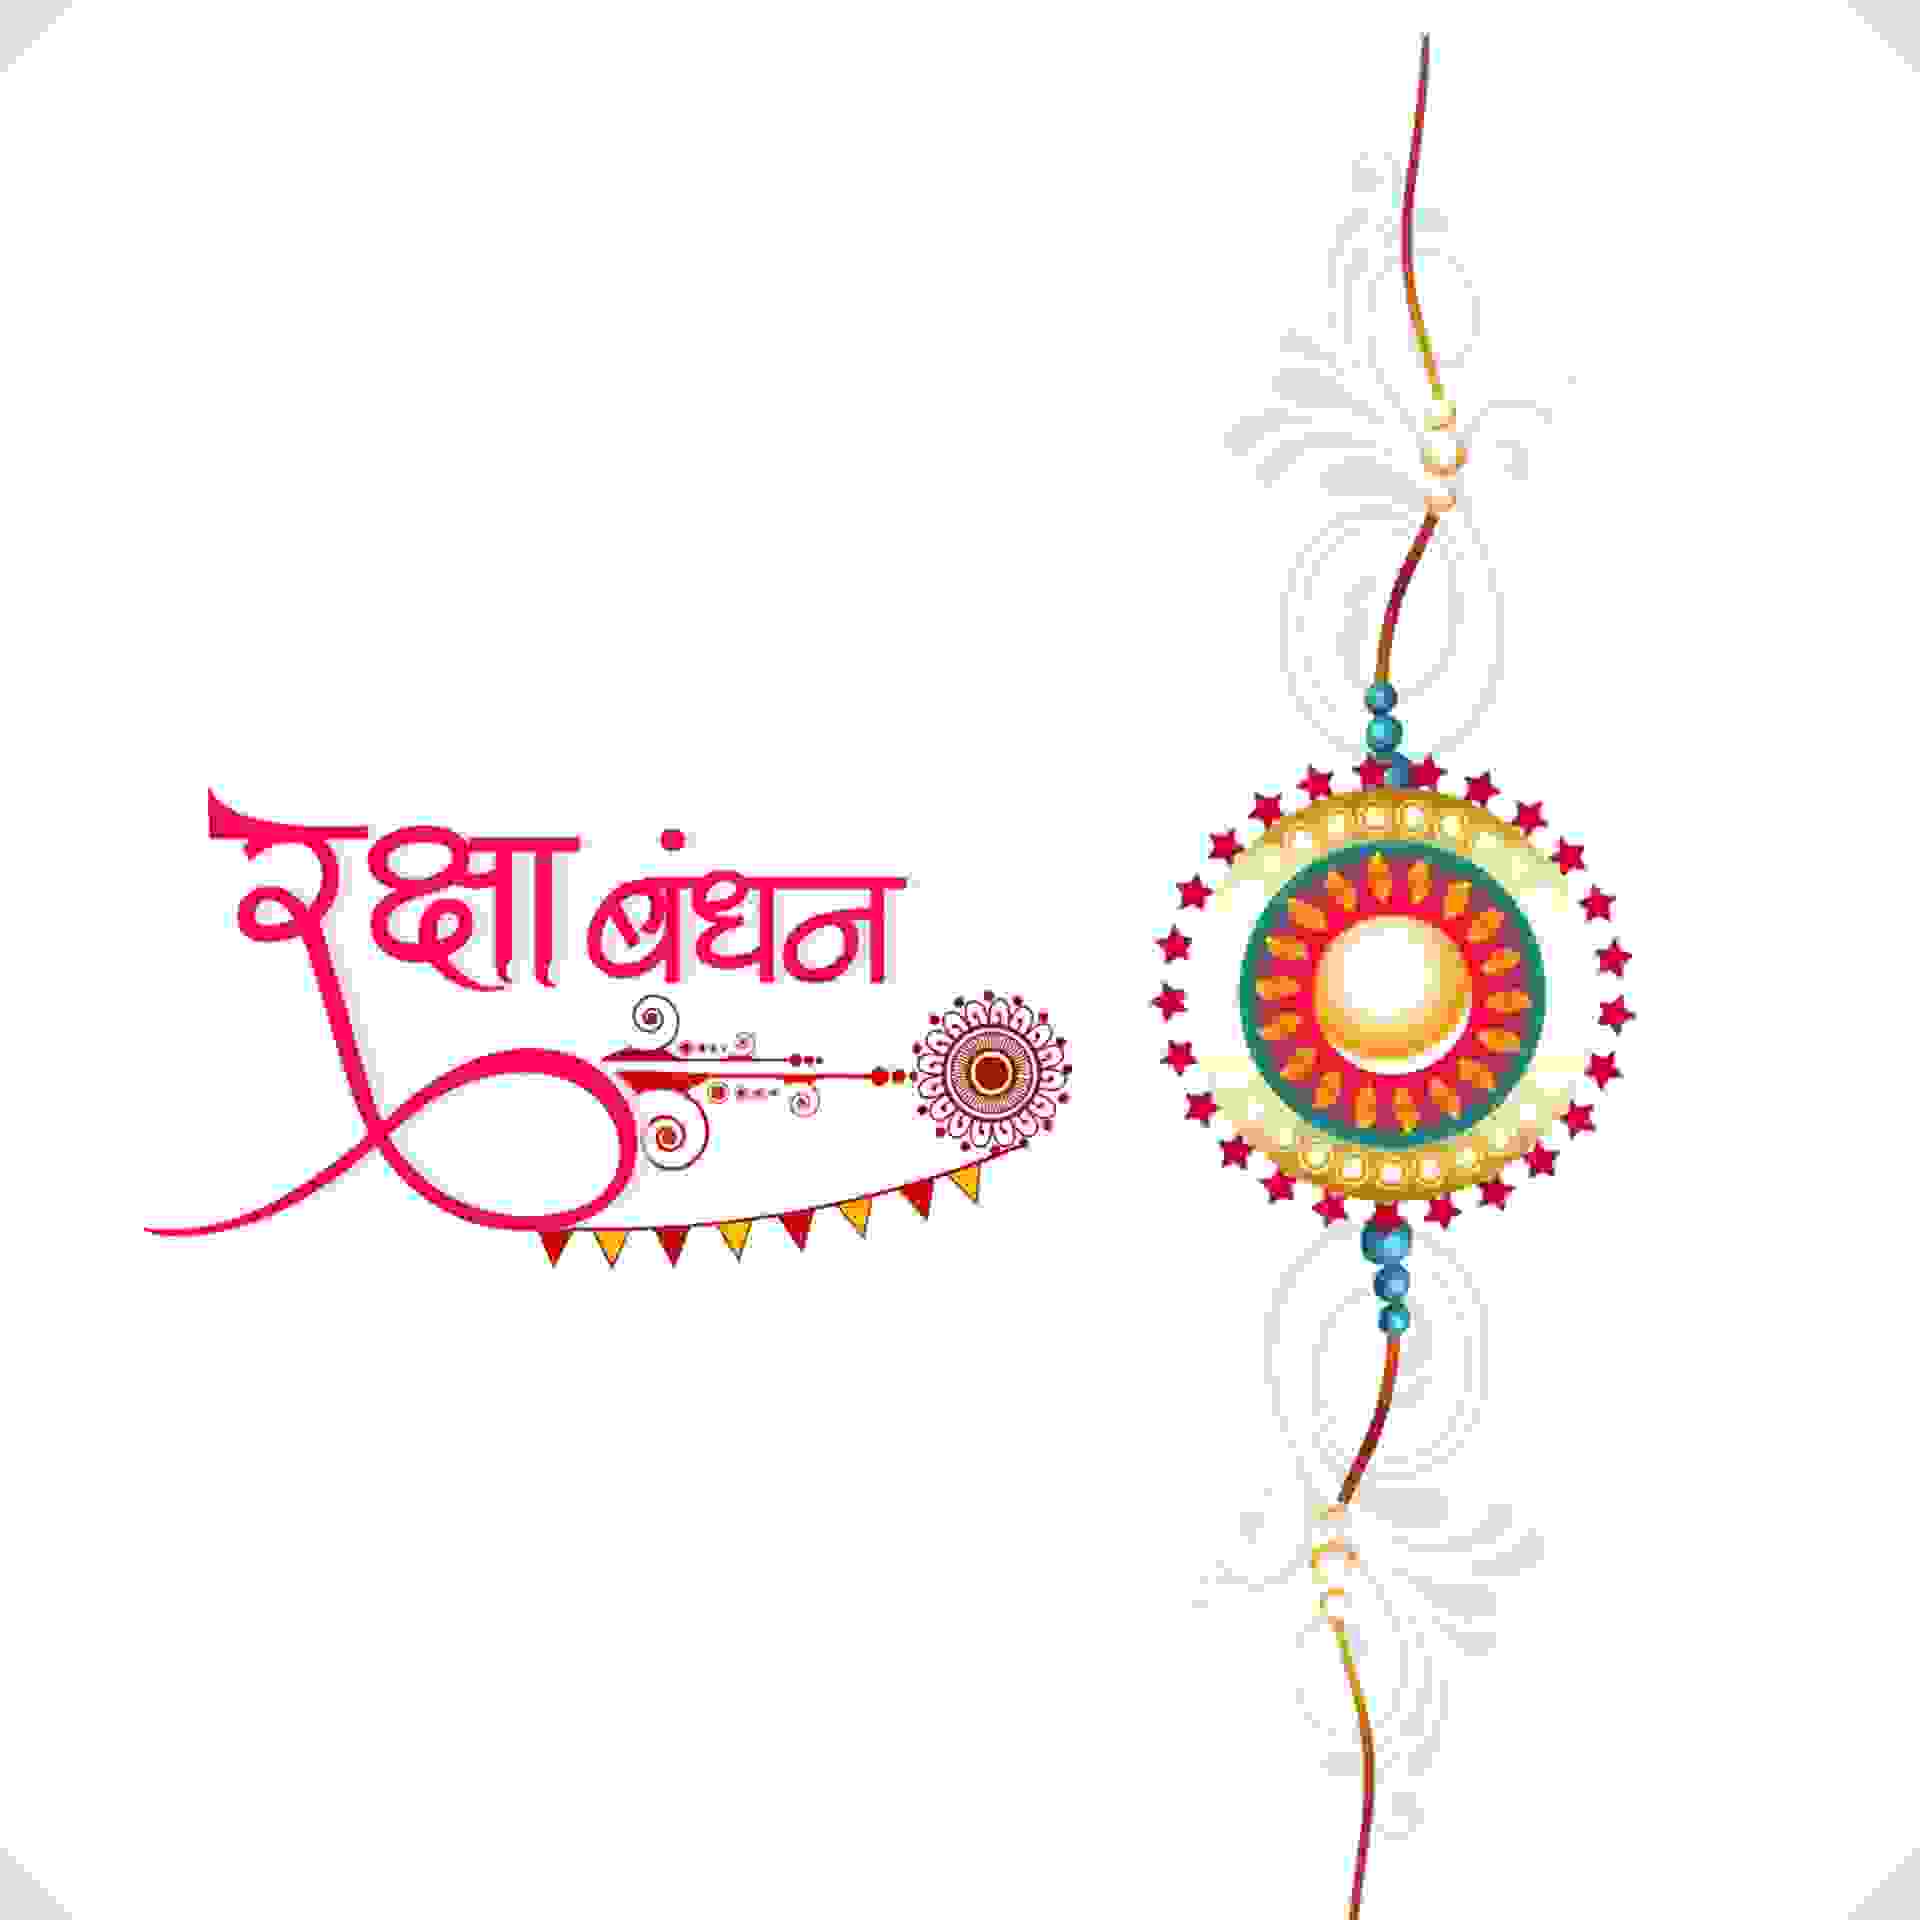 Information about Raksha Bandhan (रक्षा बंधन) Festival – Rakhi Bazaar